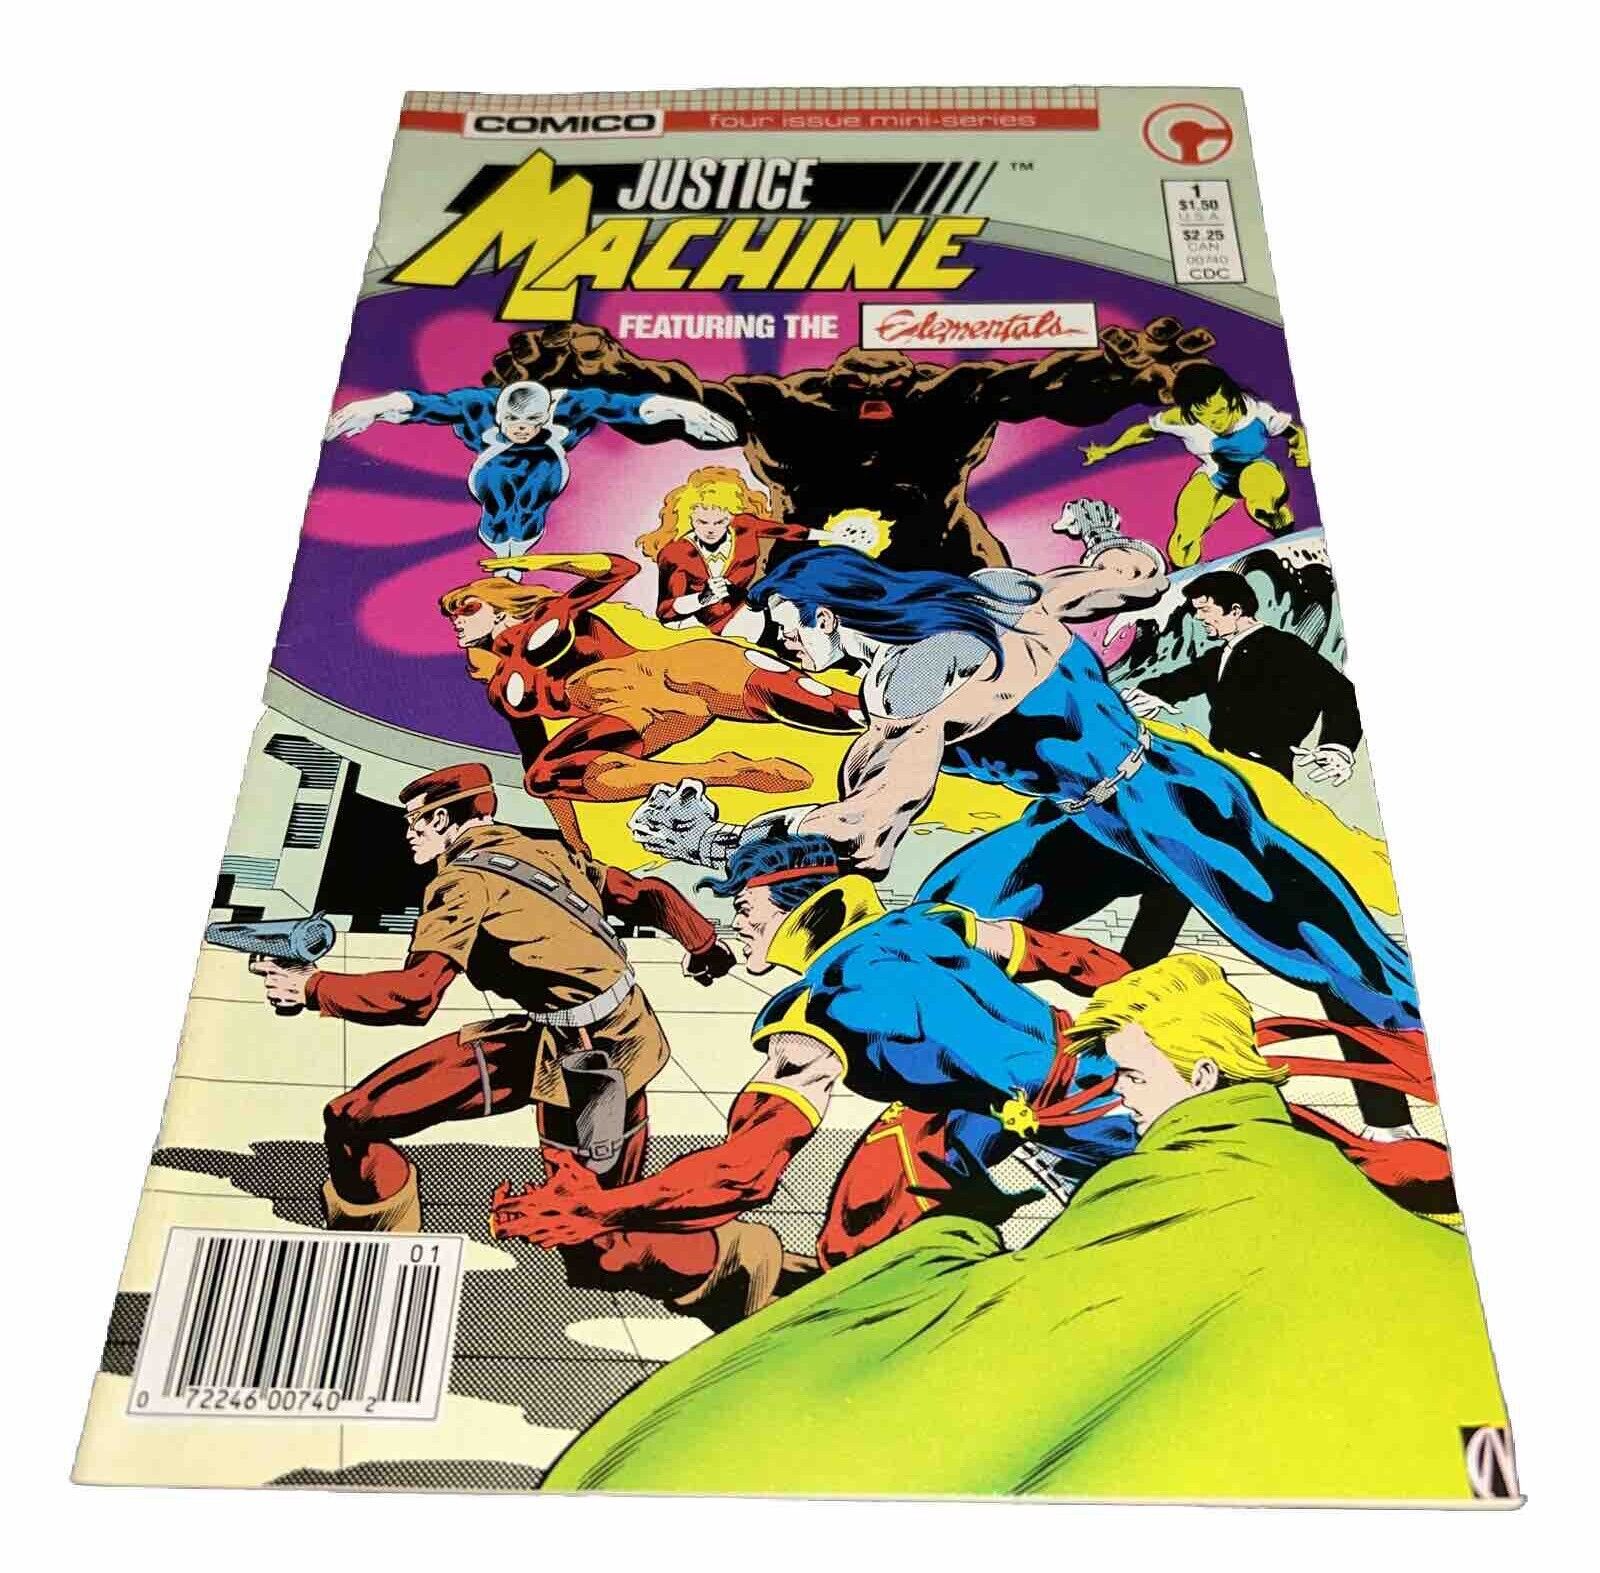 JUSTICE MACHINE FEATURING THE ELEMENTALS #1 Comic Book Comico Comics 1986